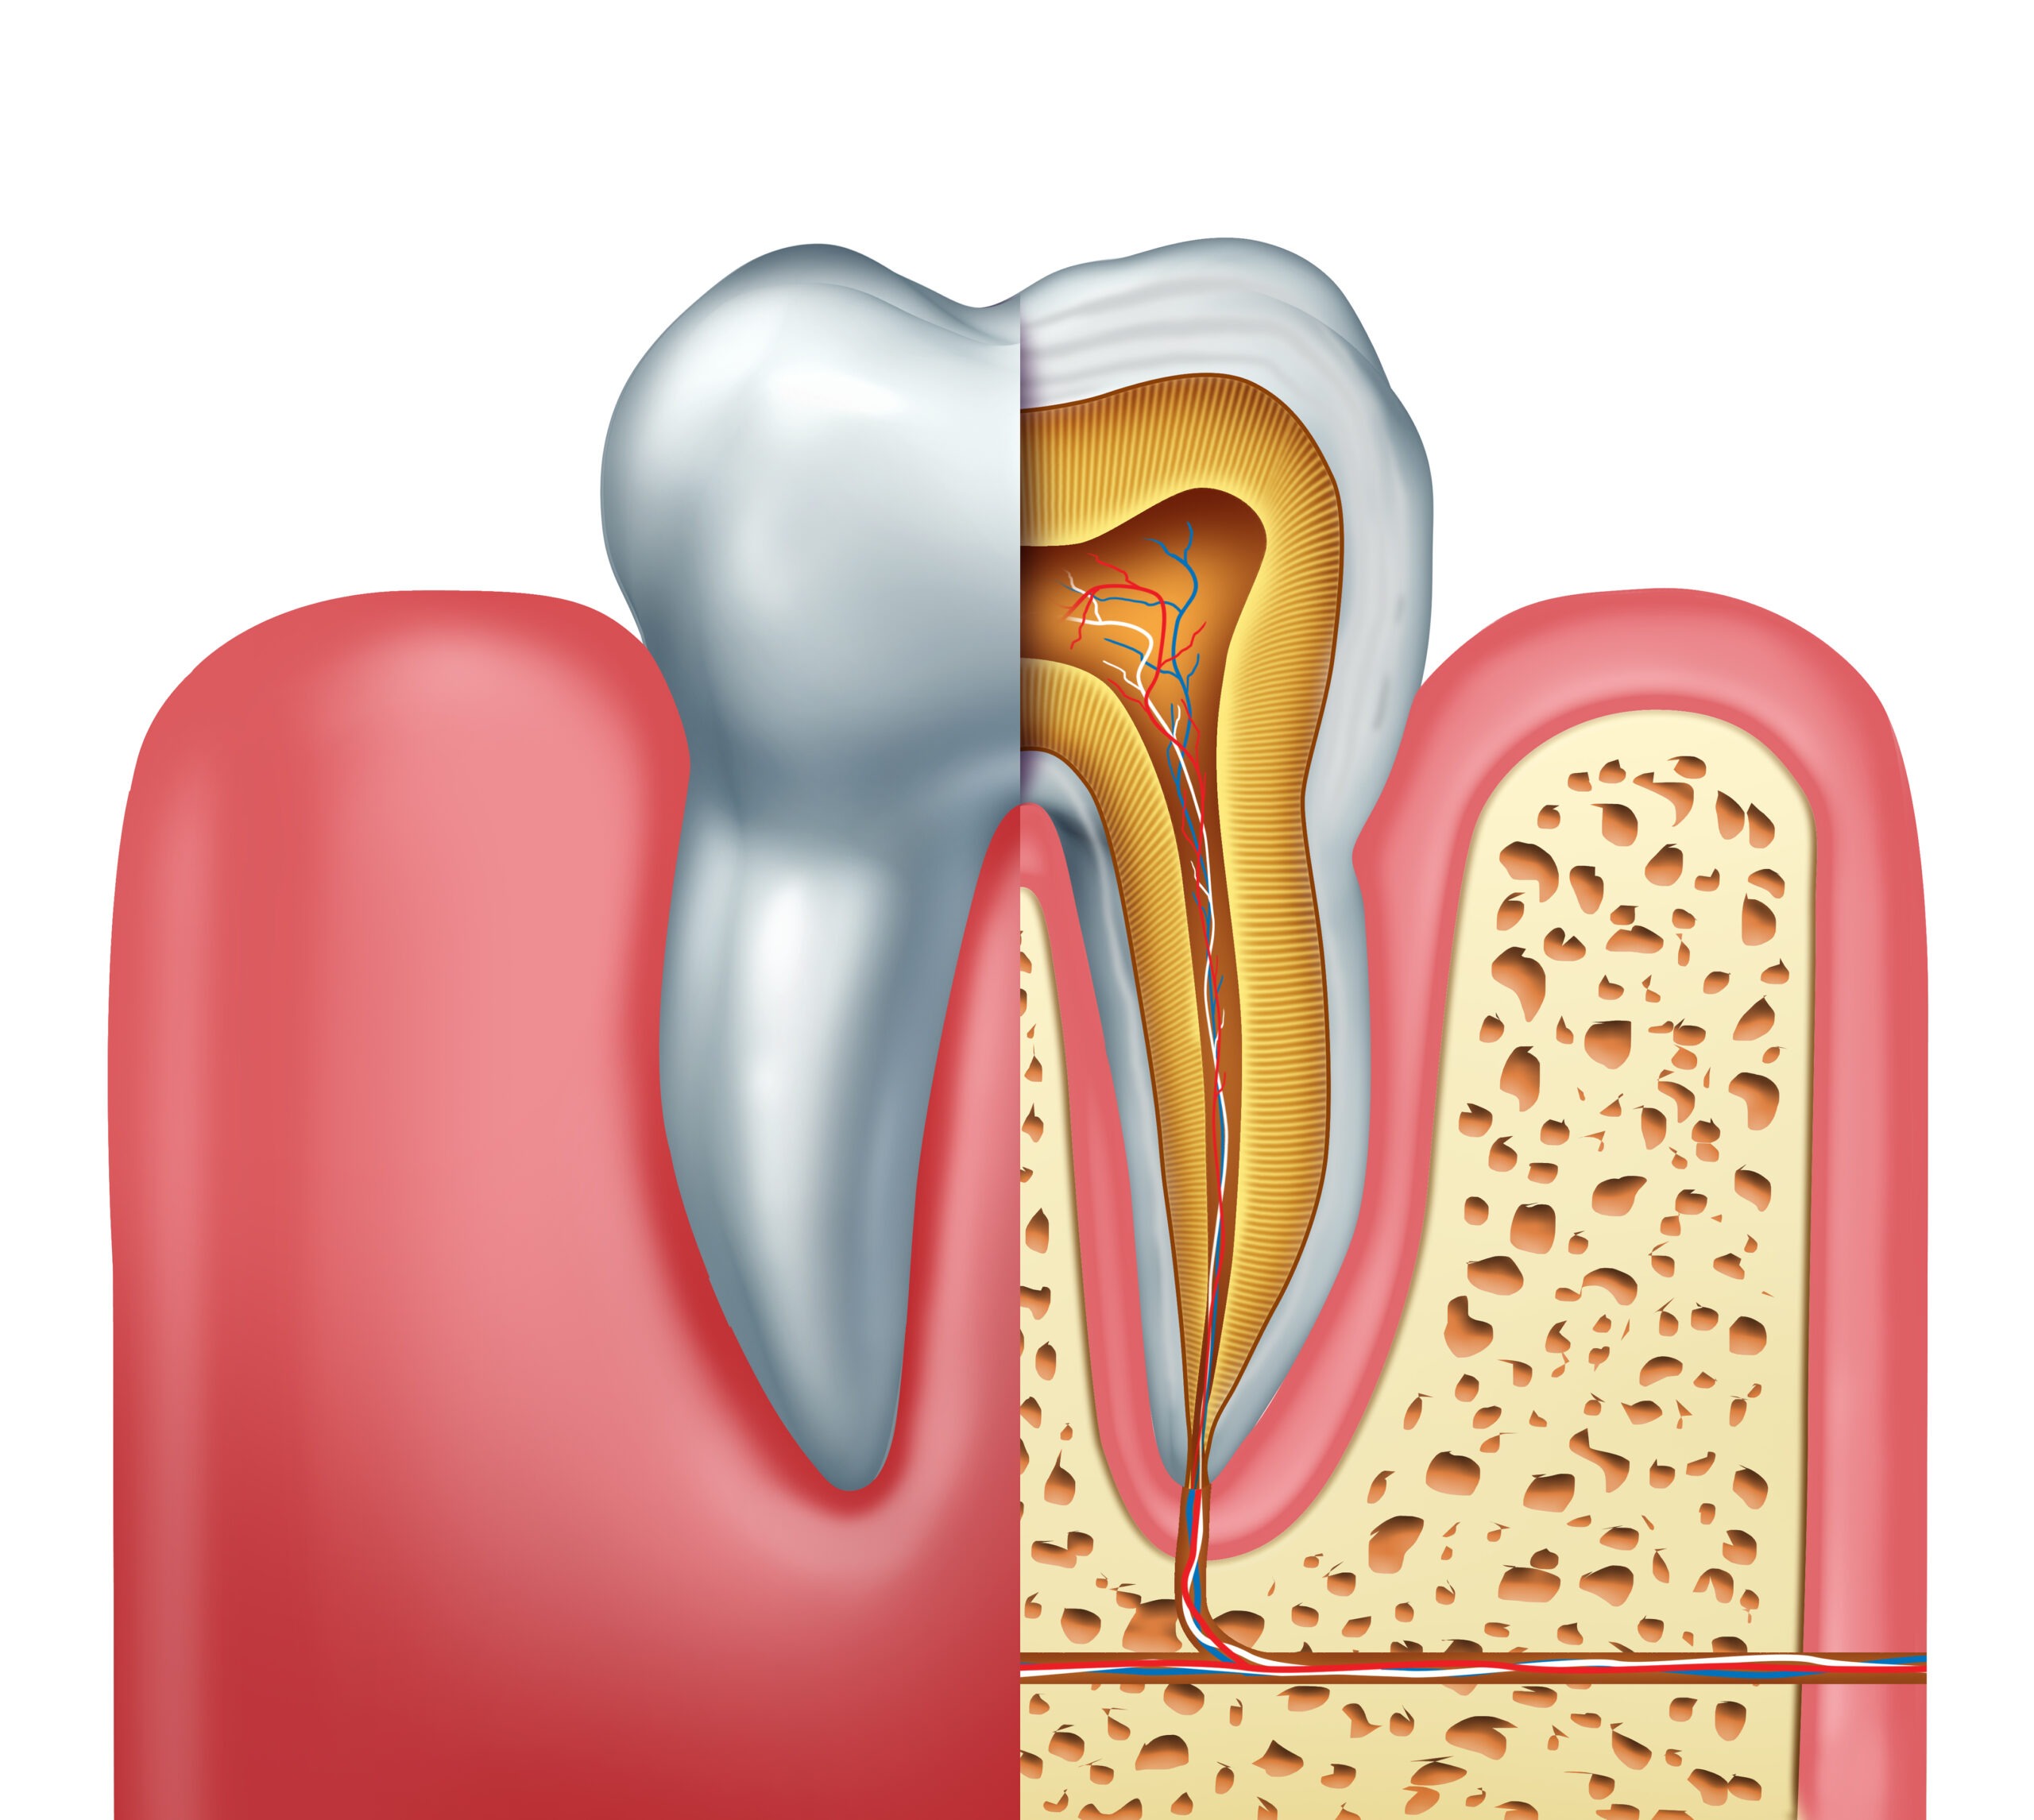 Human tooth anatomy